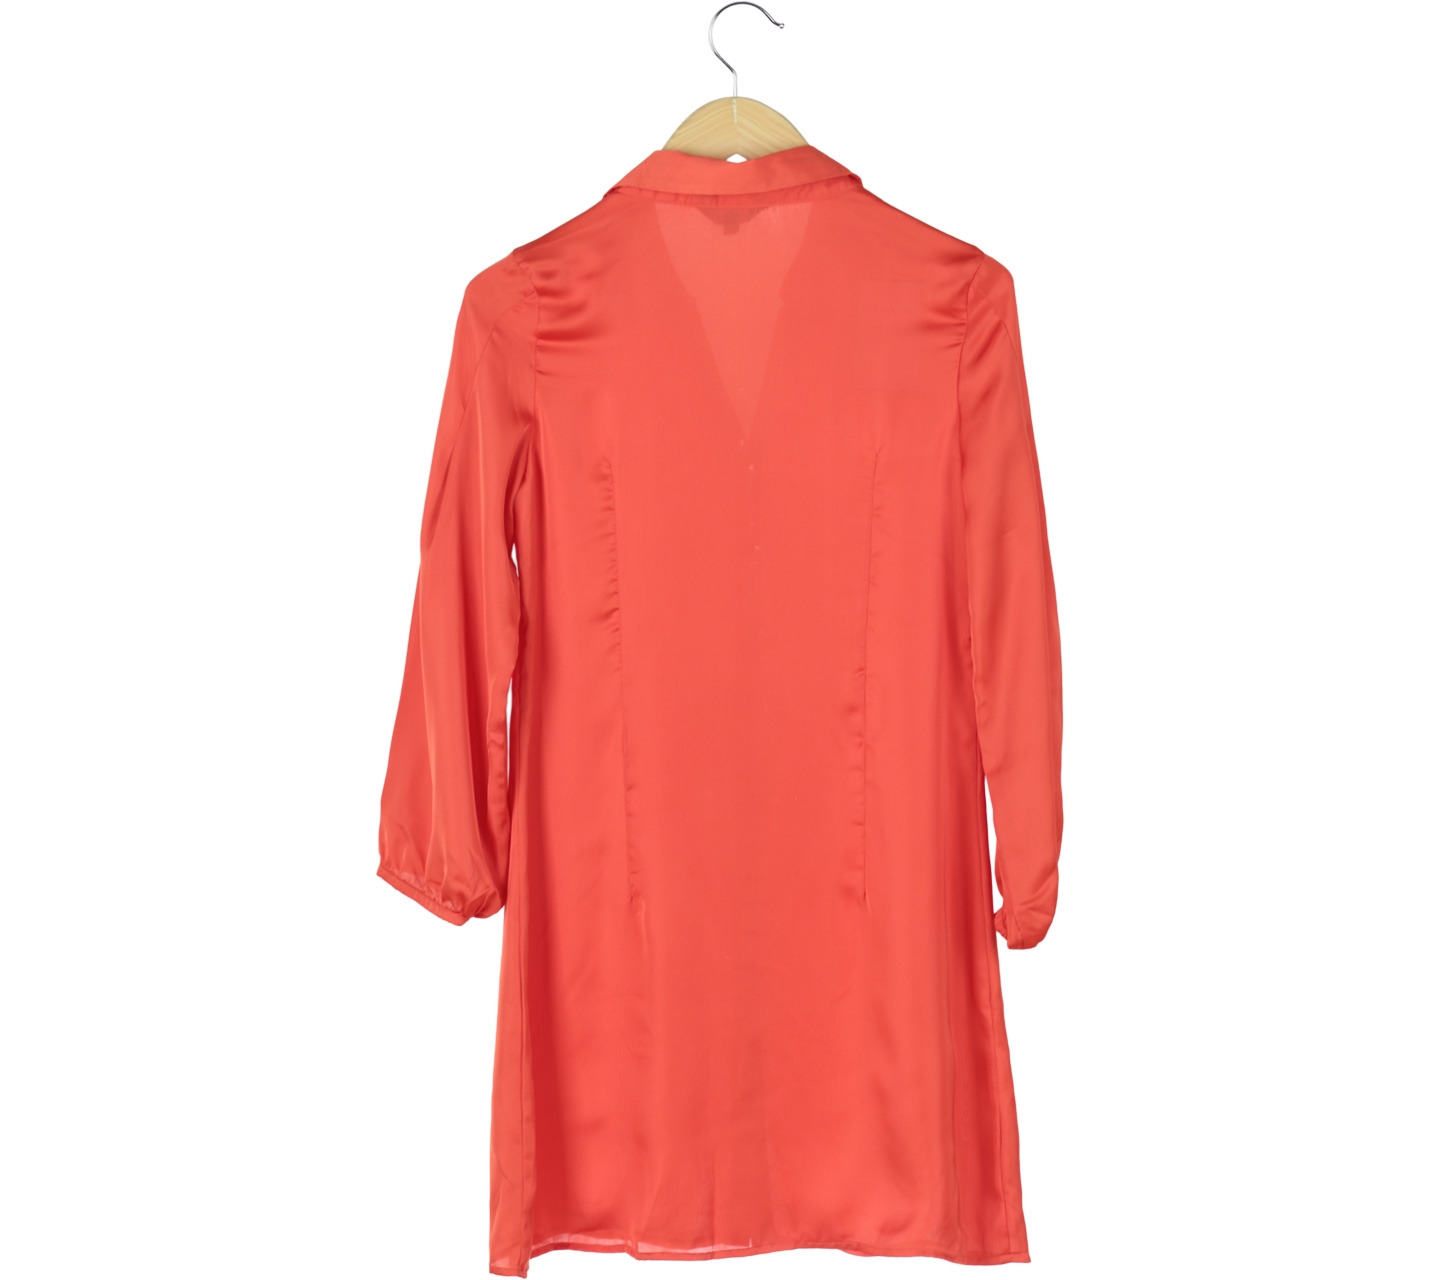 P.S Orange Shirt Mini Dress